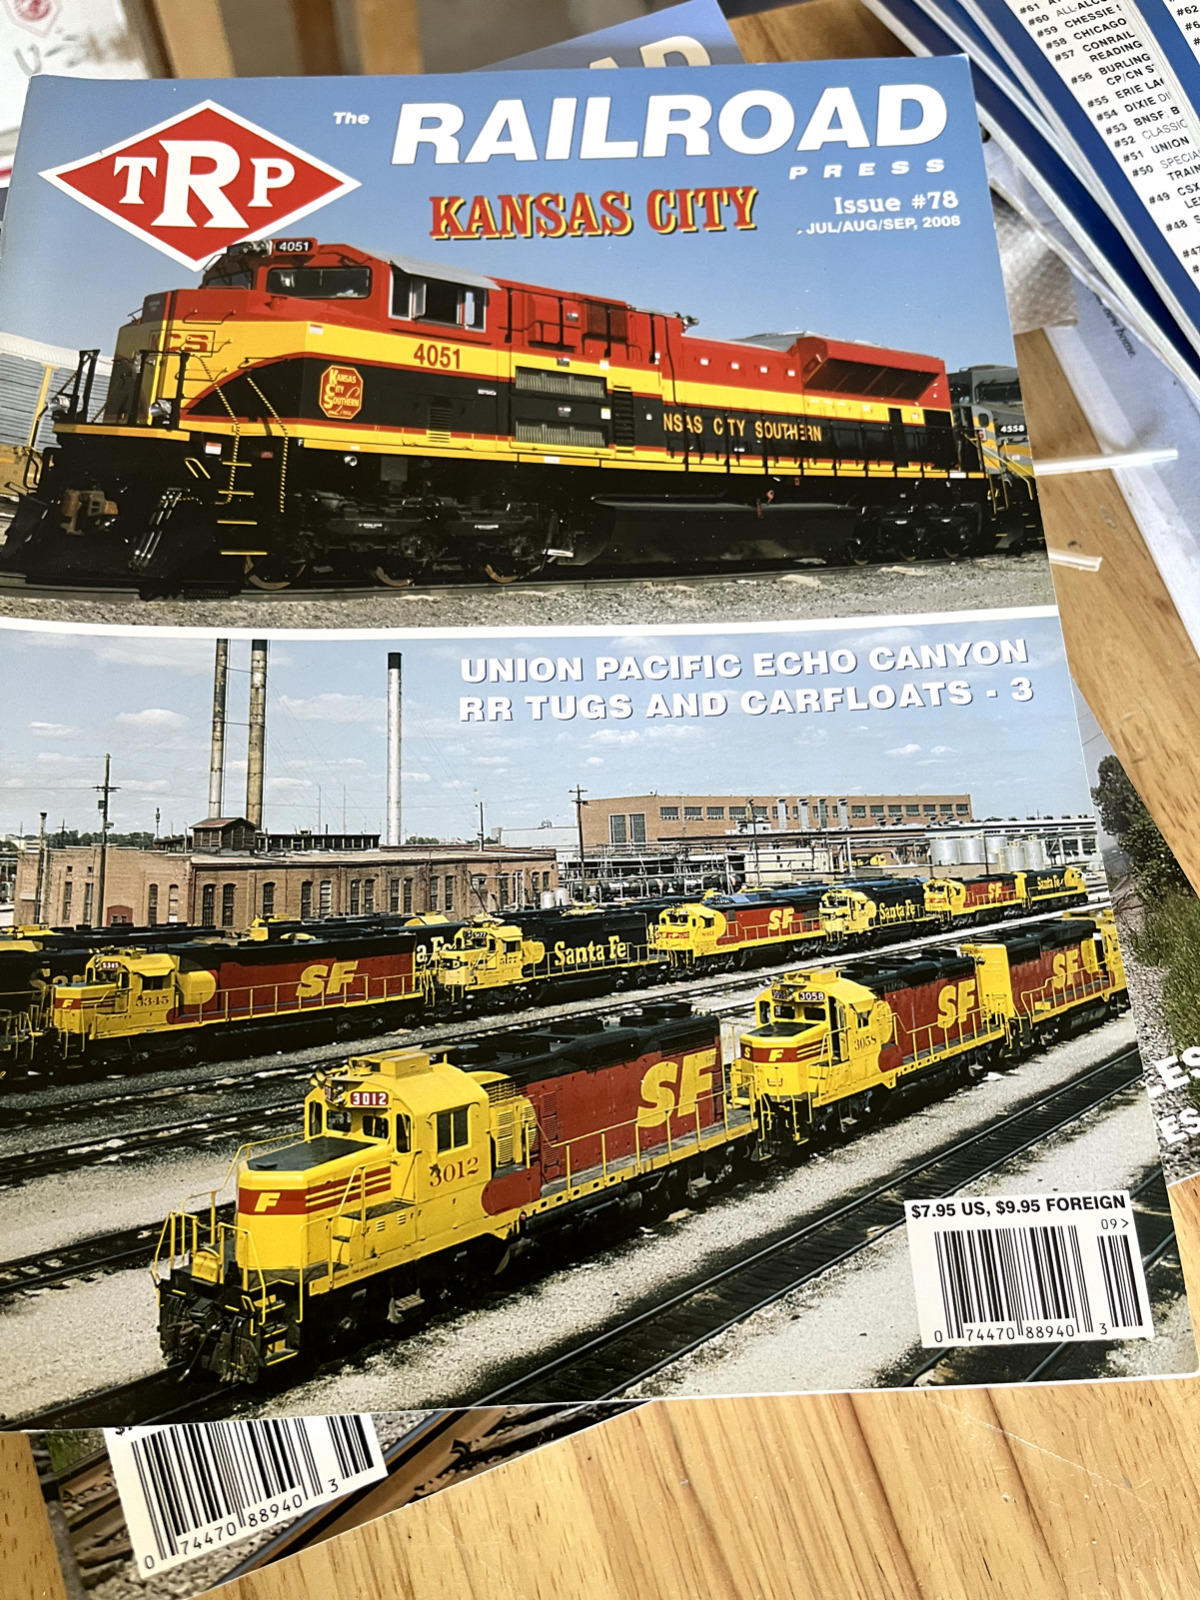 Union Pacific Echo Canyon -  Railroad Press Magazine Jul/Aug/ Sep 2008  Issue 78